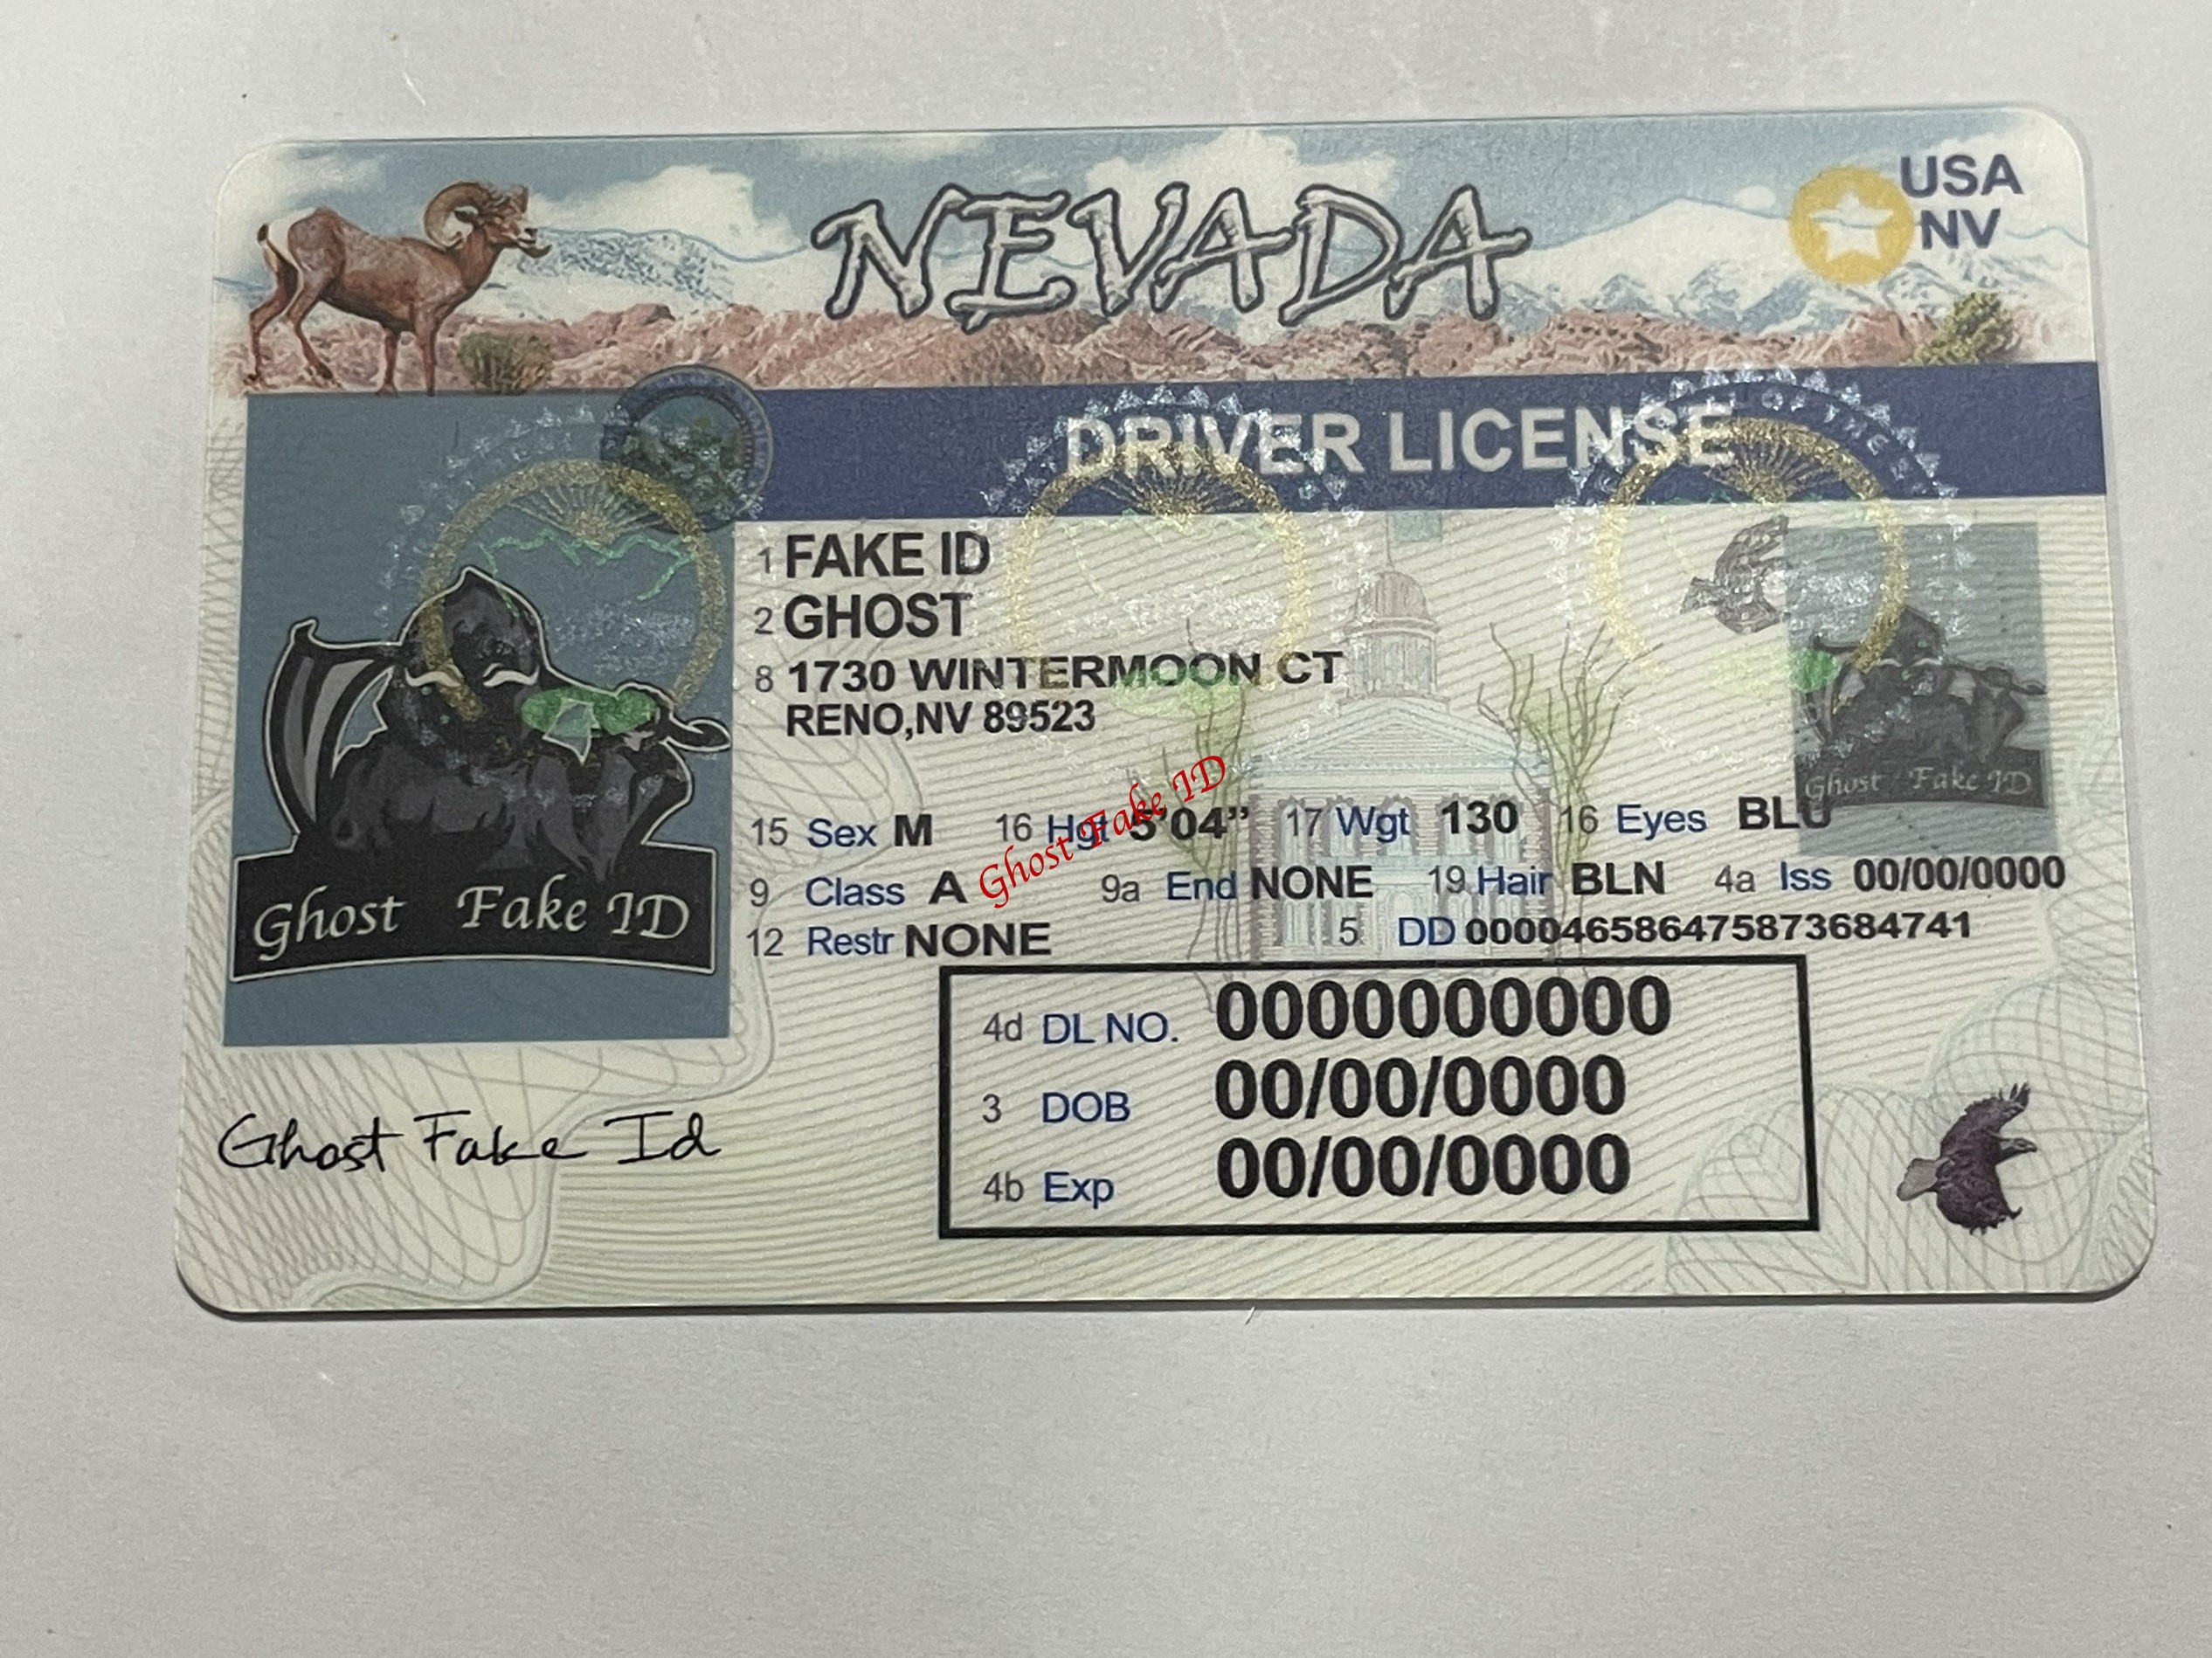 Nevada - Scanable fake id